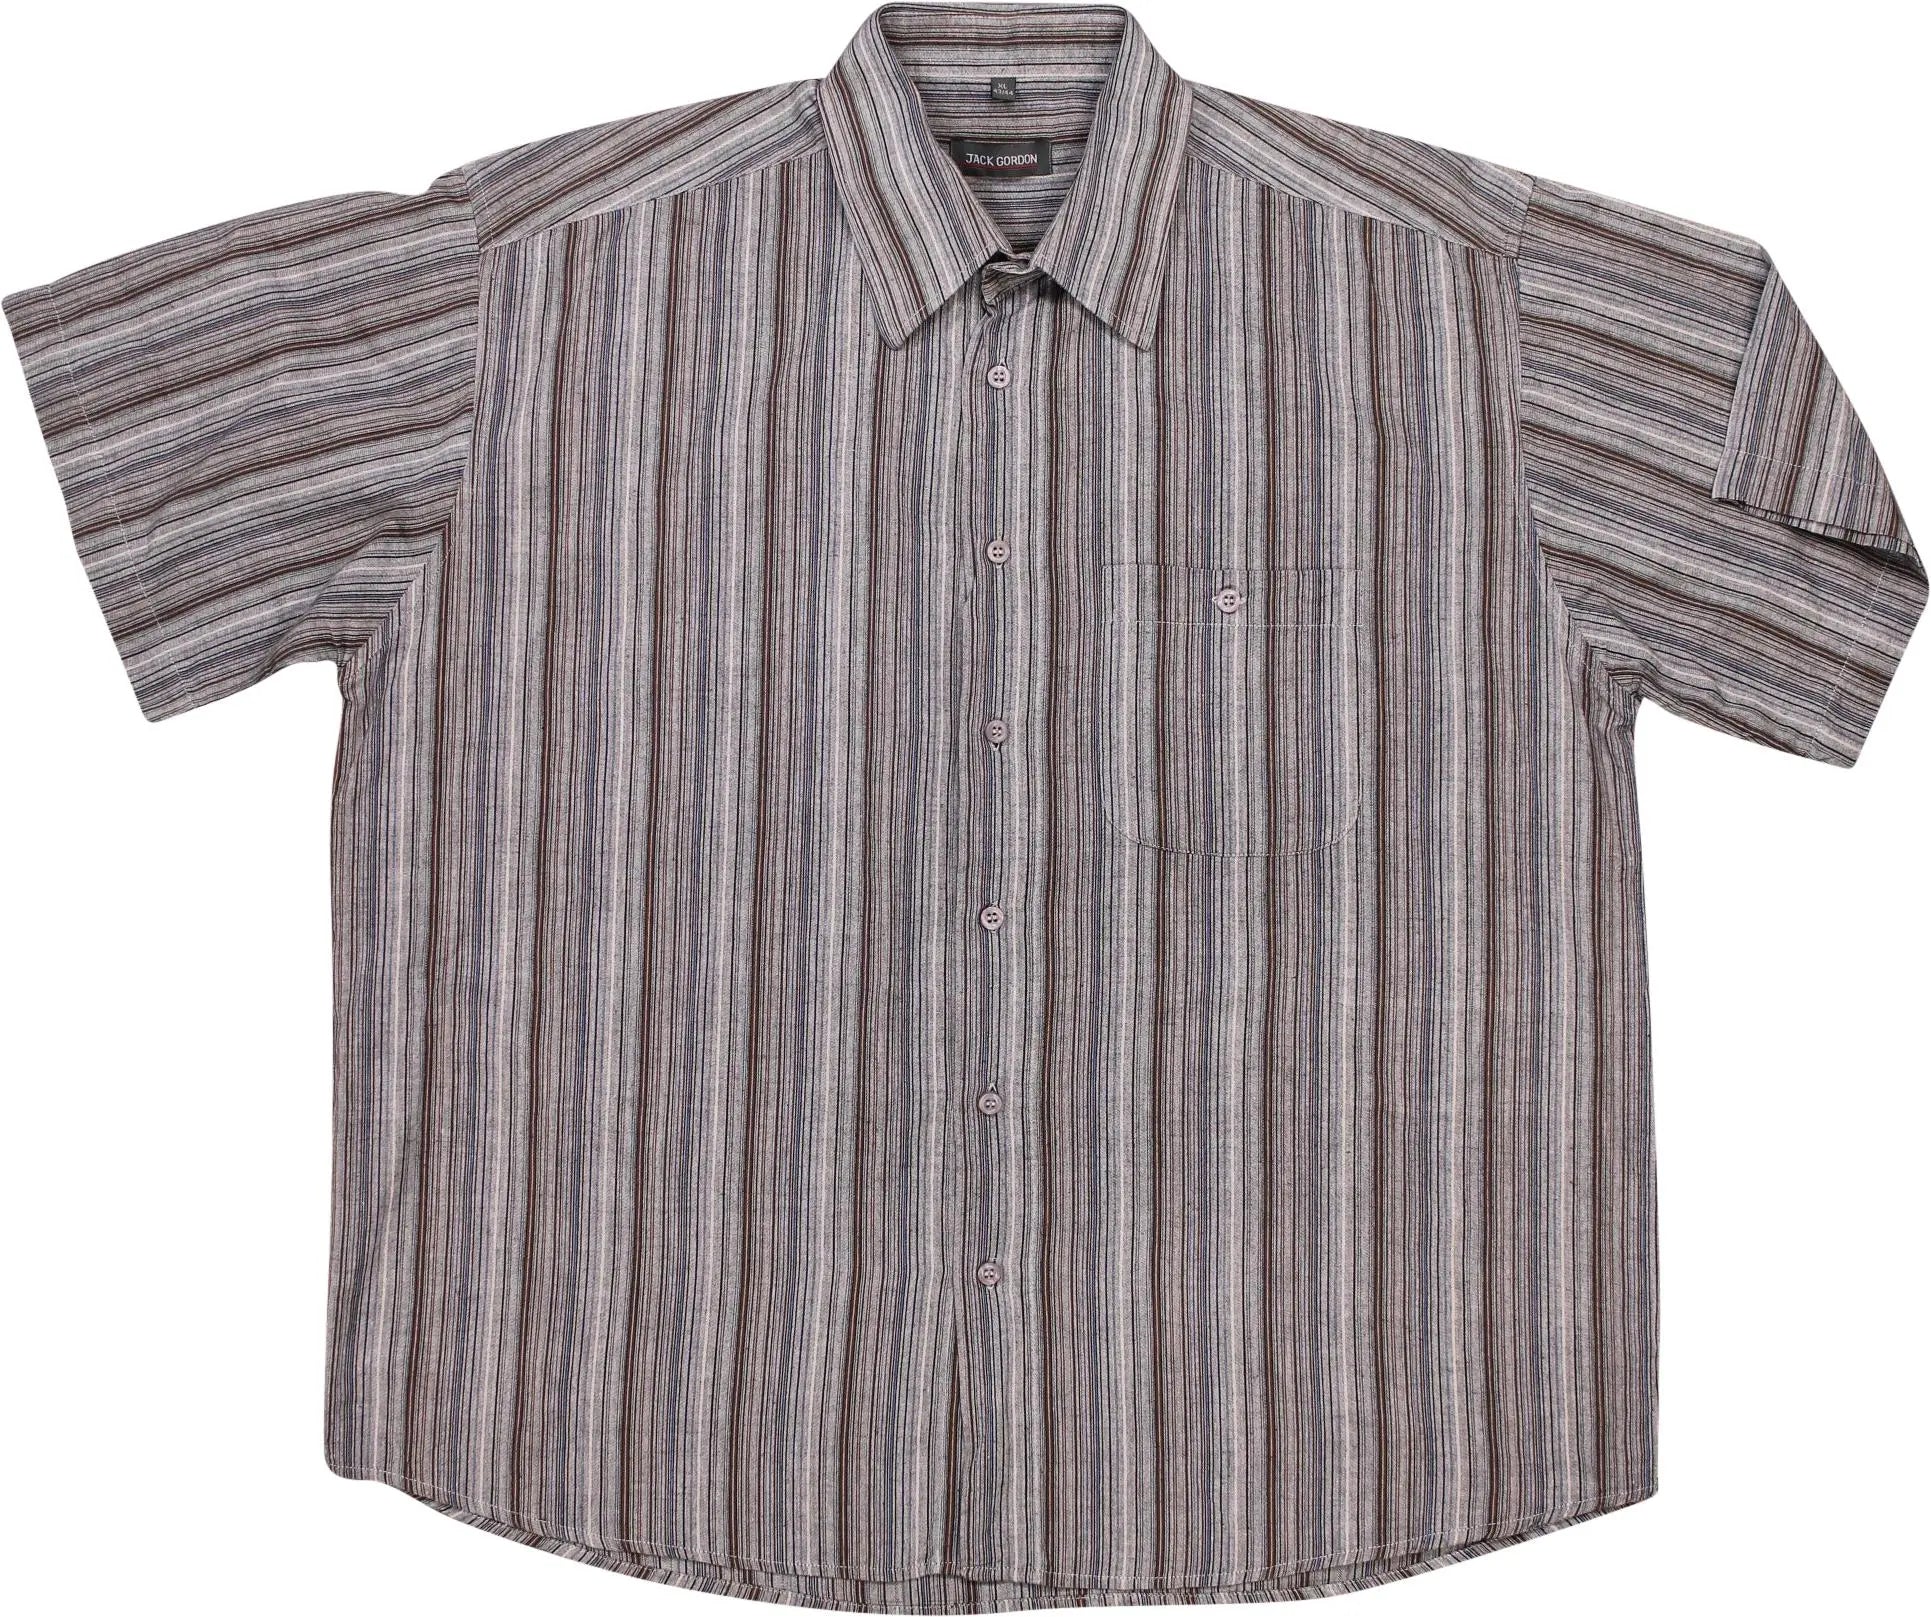 Jack Gordon - BLUE3568- ThriftTale.com - Vintage and second handclothing